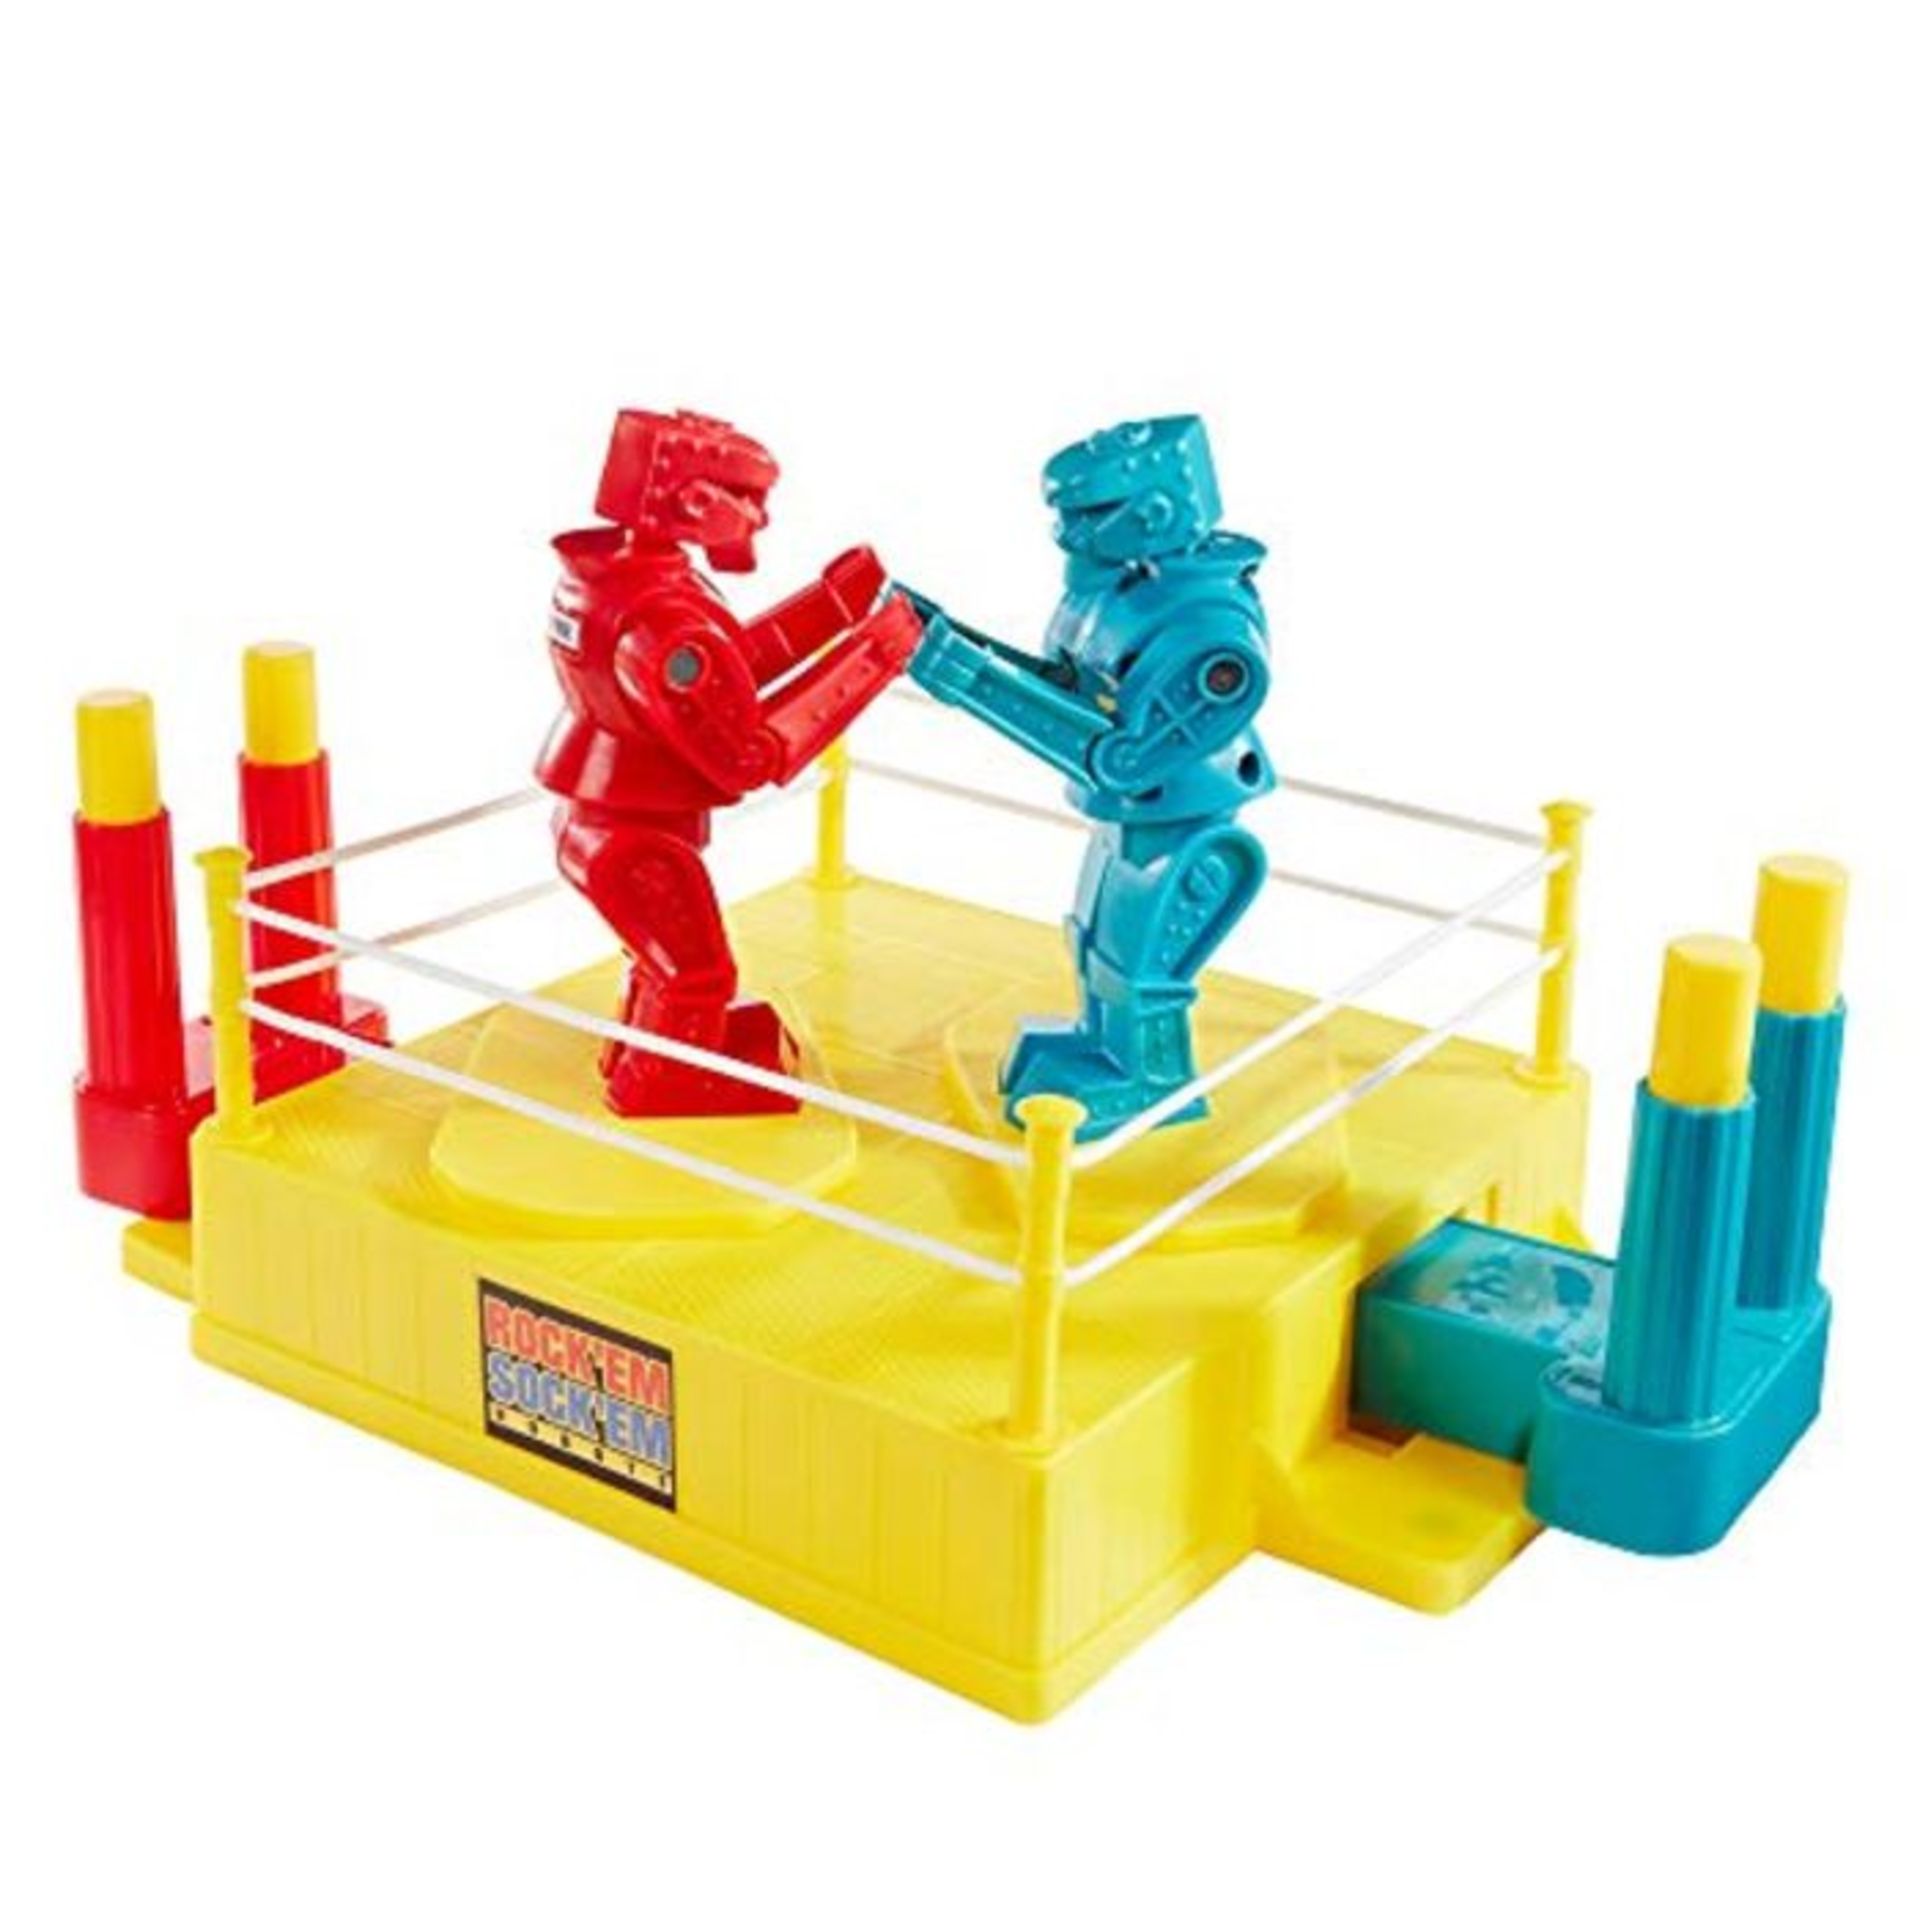 Mattel Games Rock 'Em Sock 'Em Robots Boxing Game for 2 Players Ages 6 Years and Older